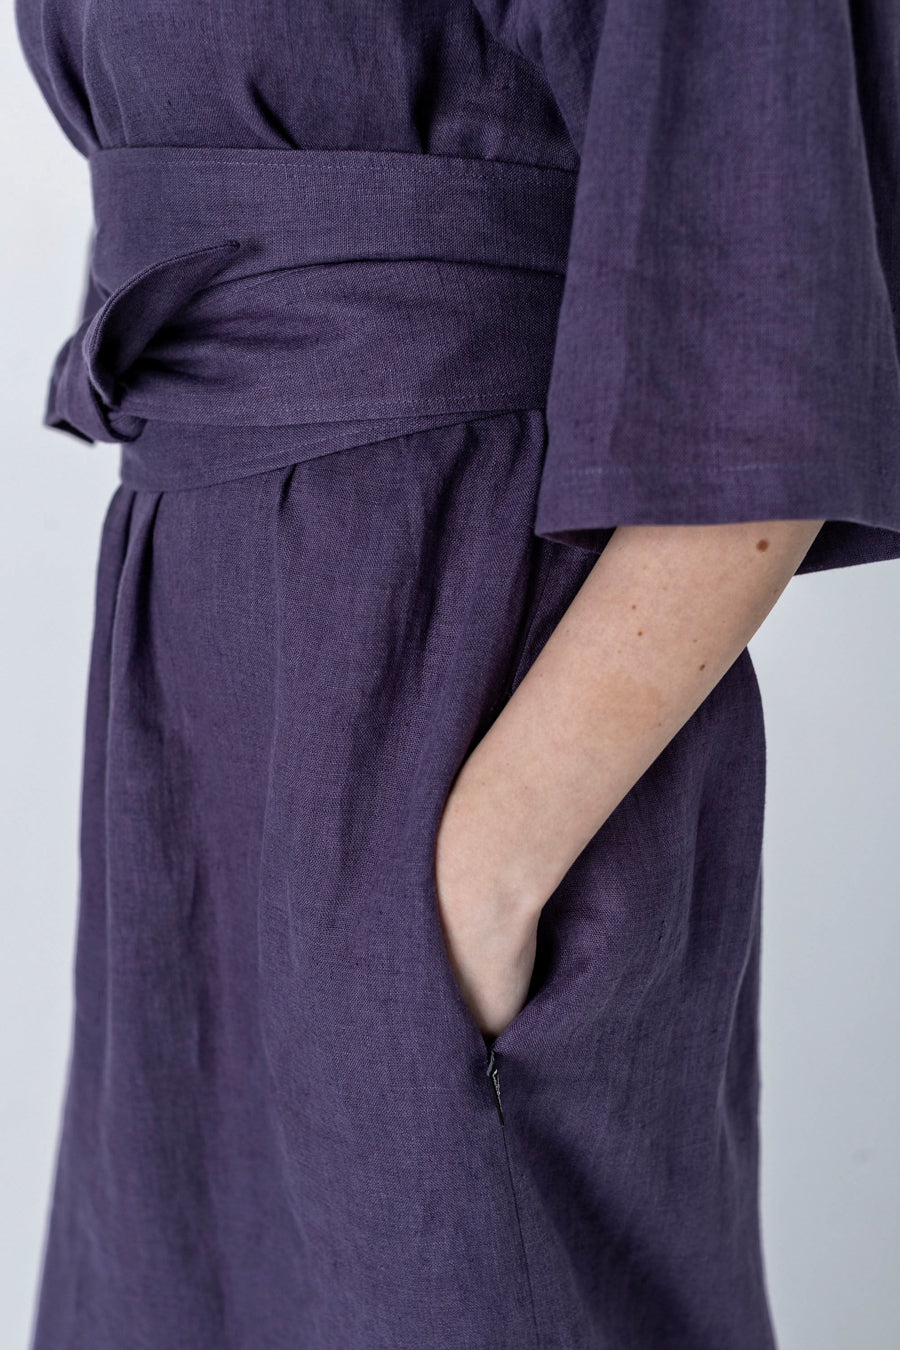 SONA | Linen Ruffle sleeve dress